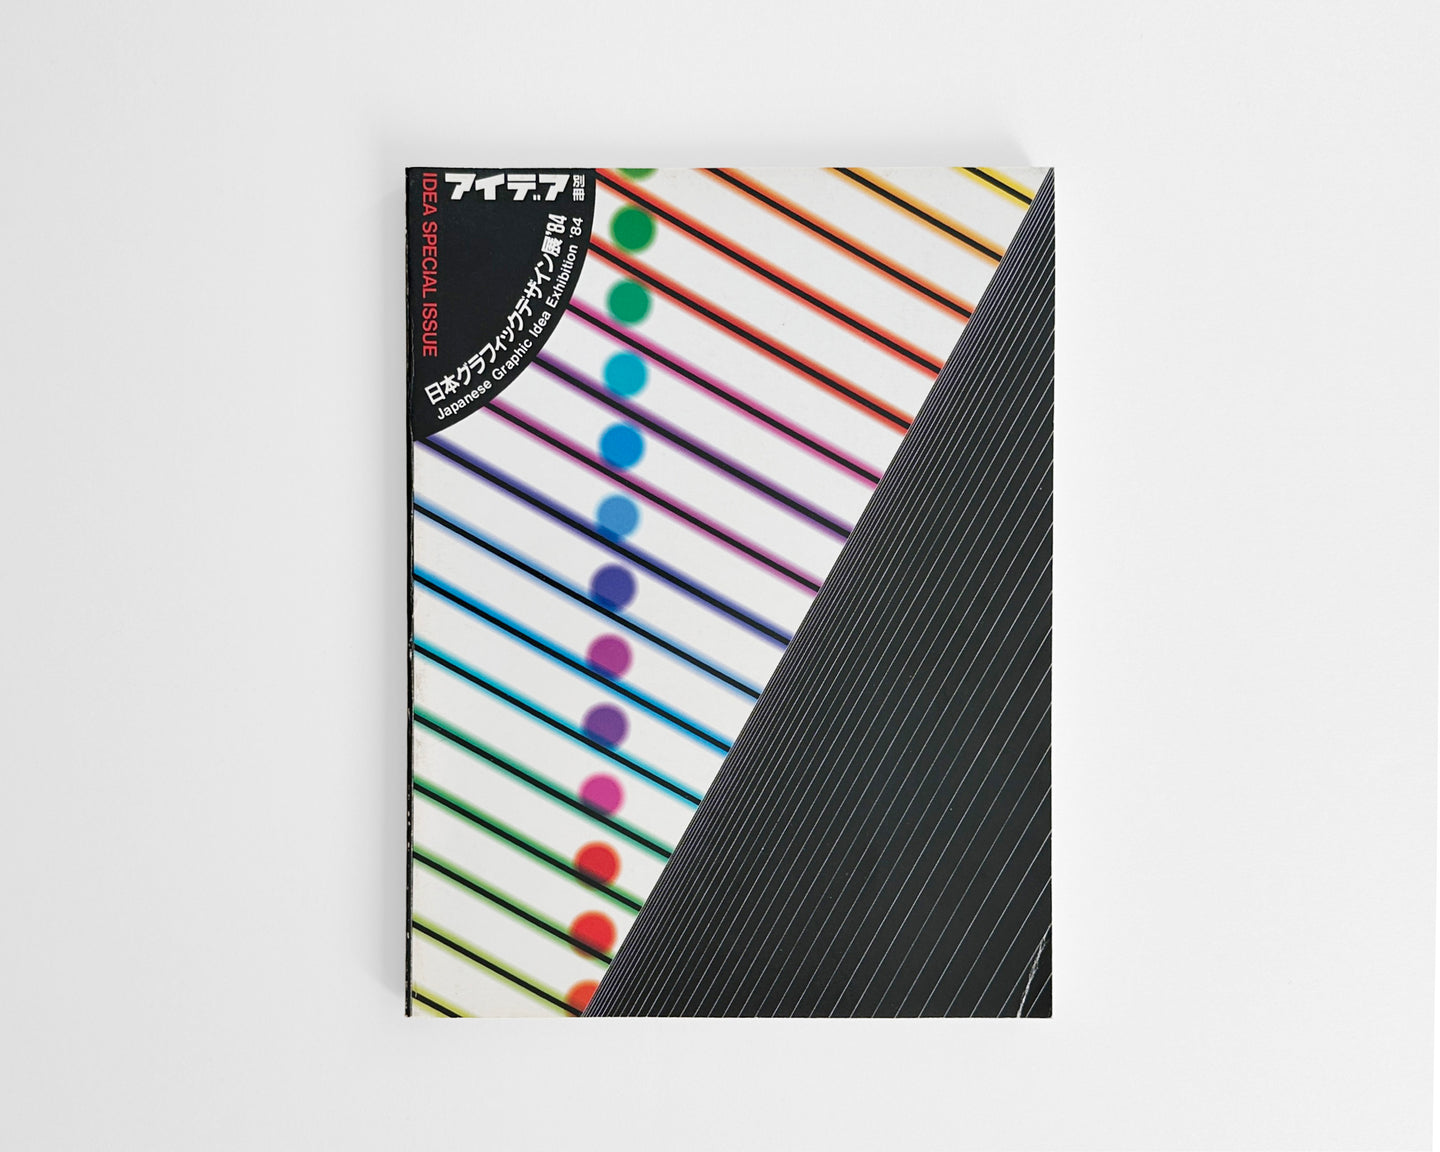 IDEA SPECIAL ISSUE — Japanese Graphic Idea Exhibition, 1984 [Cover: Kazumasa Nagai]